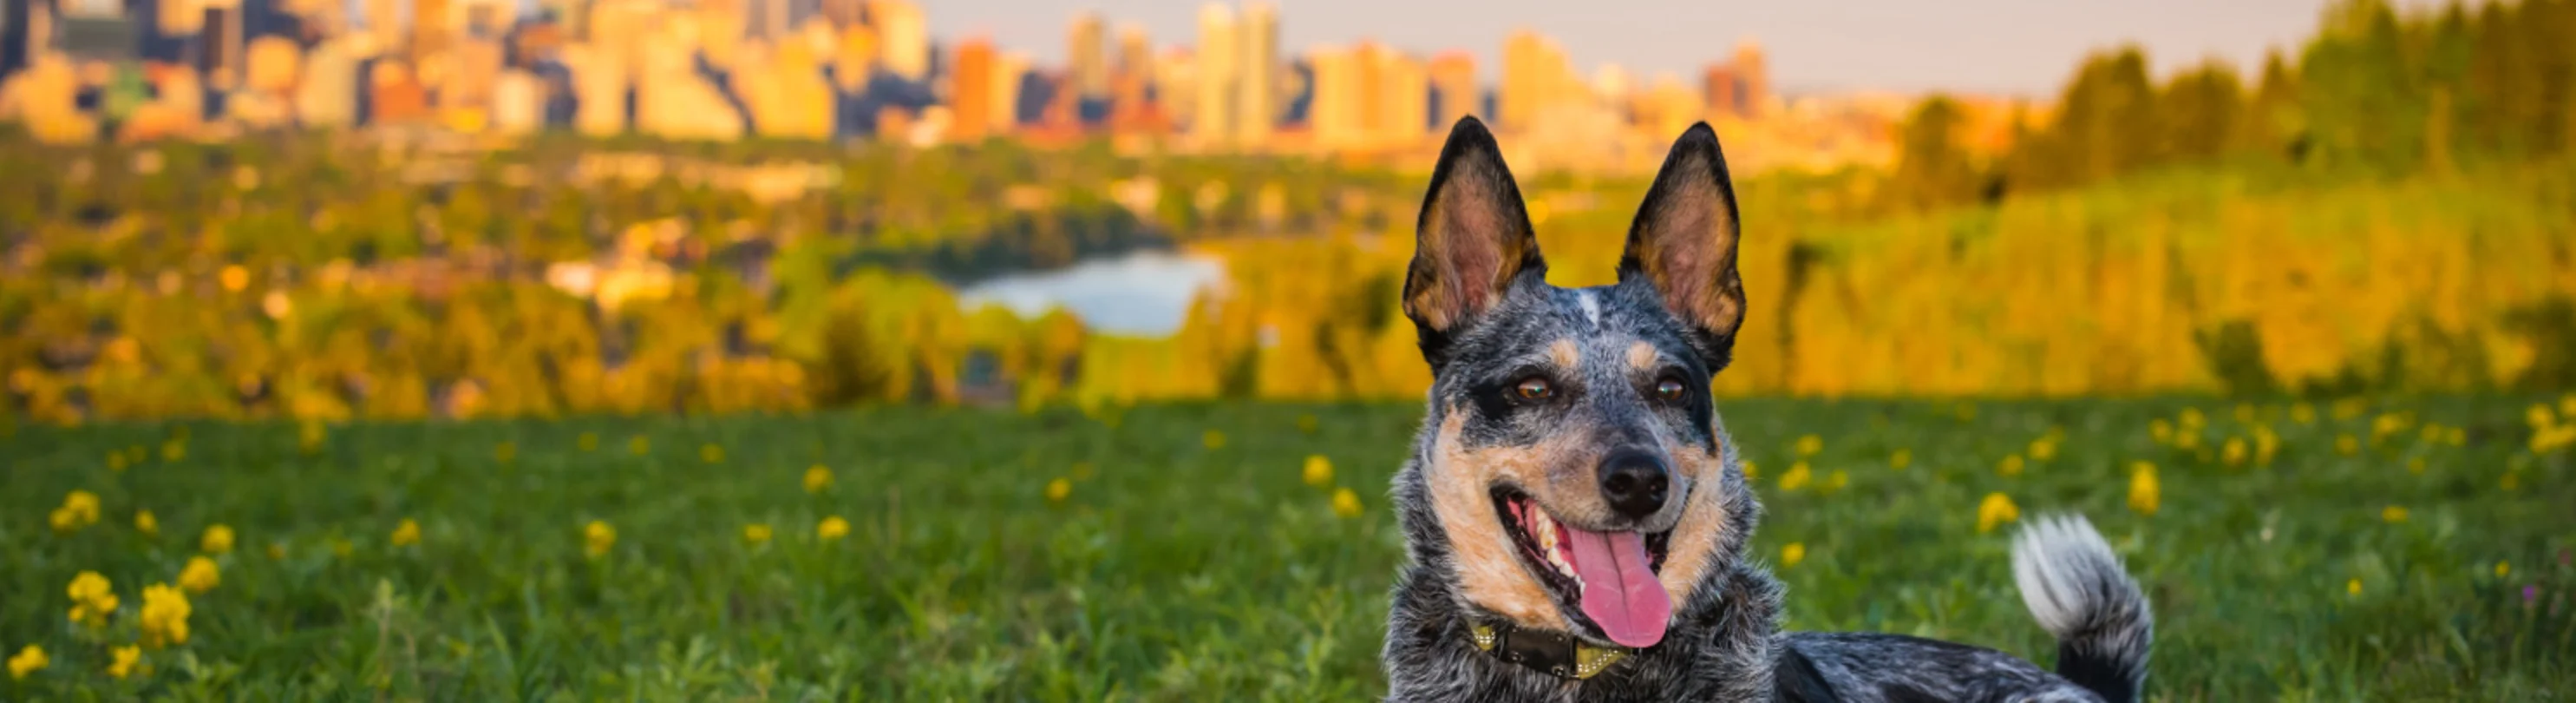 Dog in grass city skyline